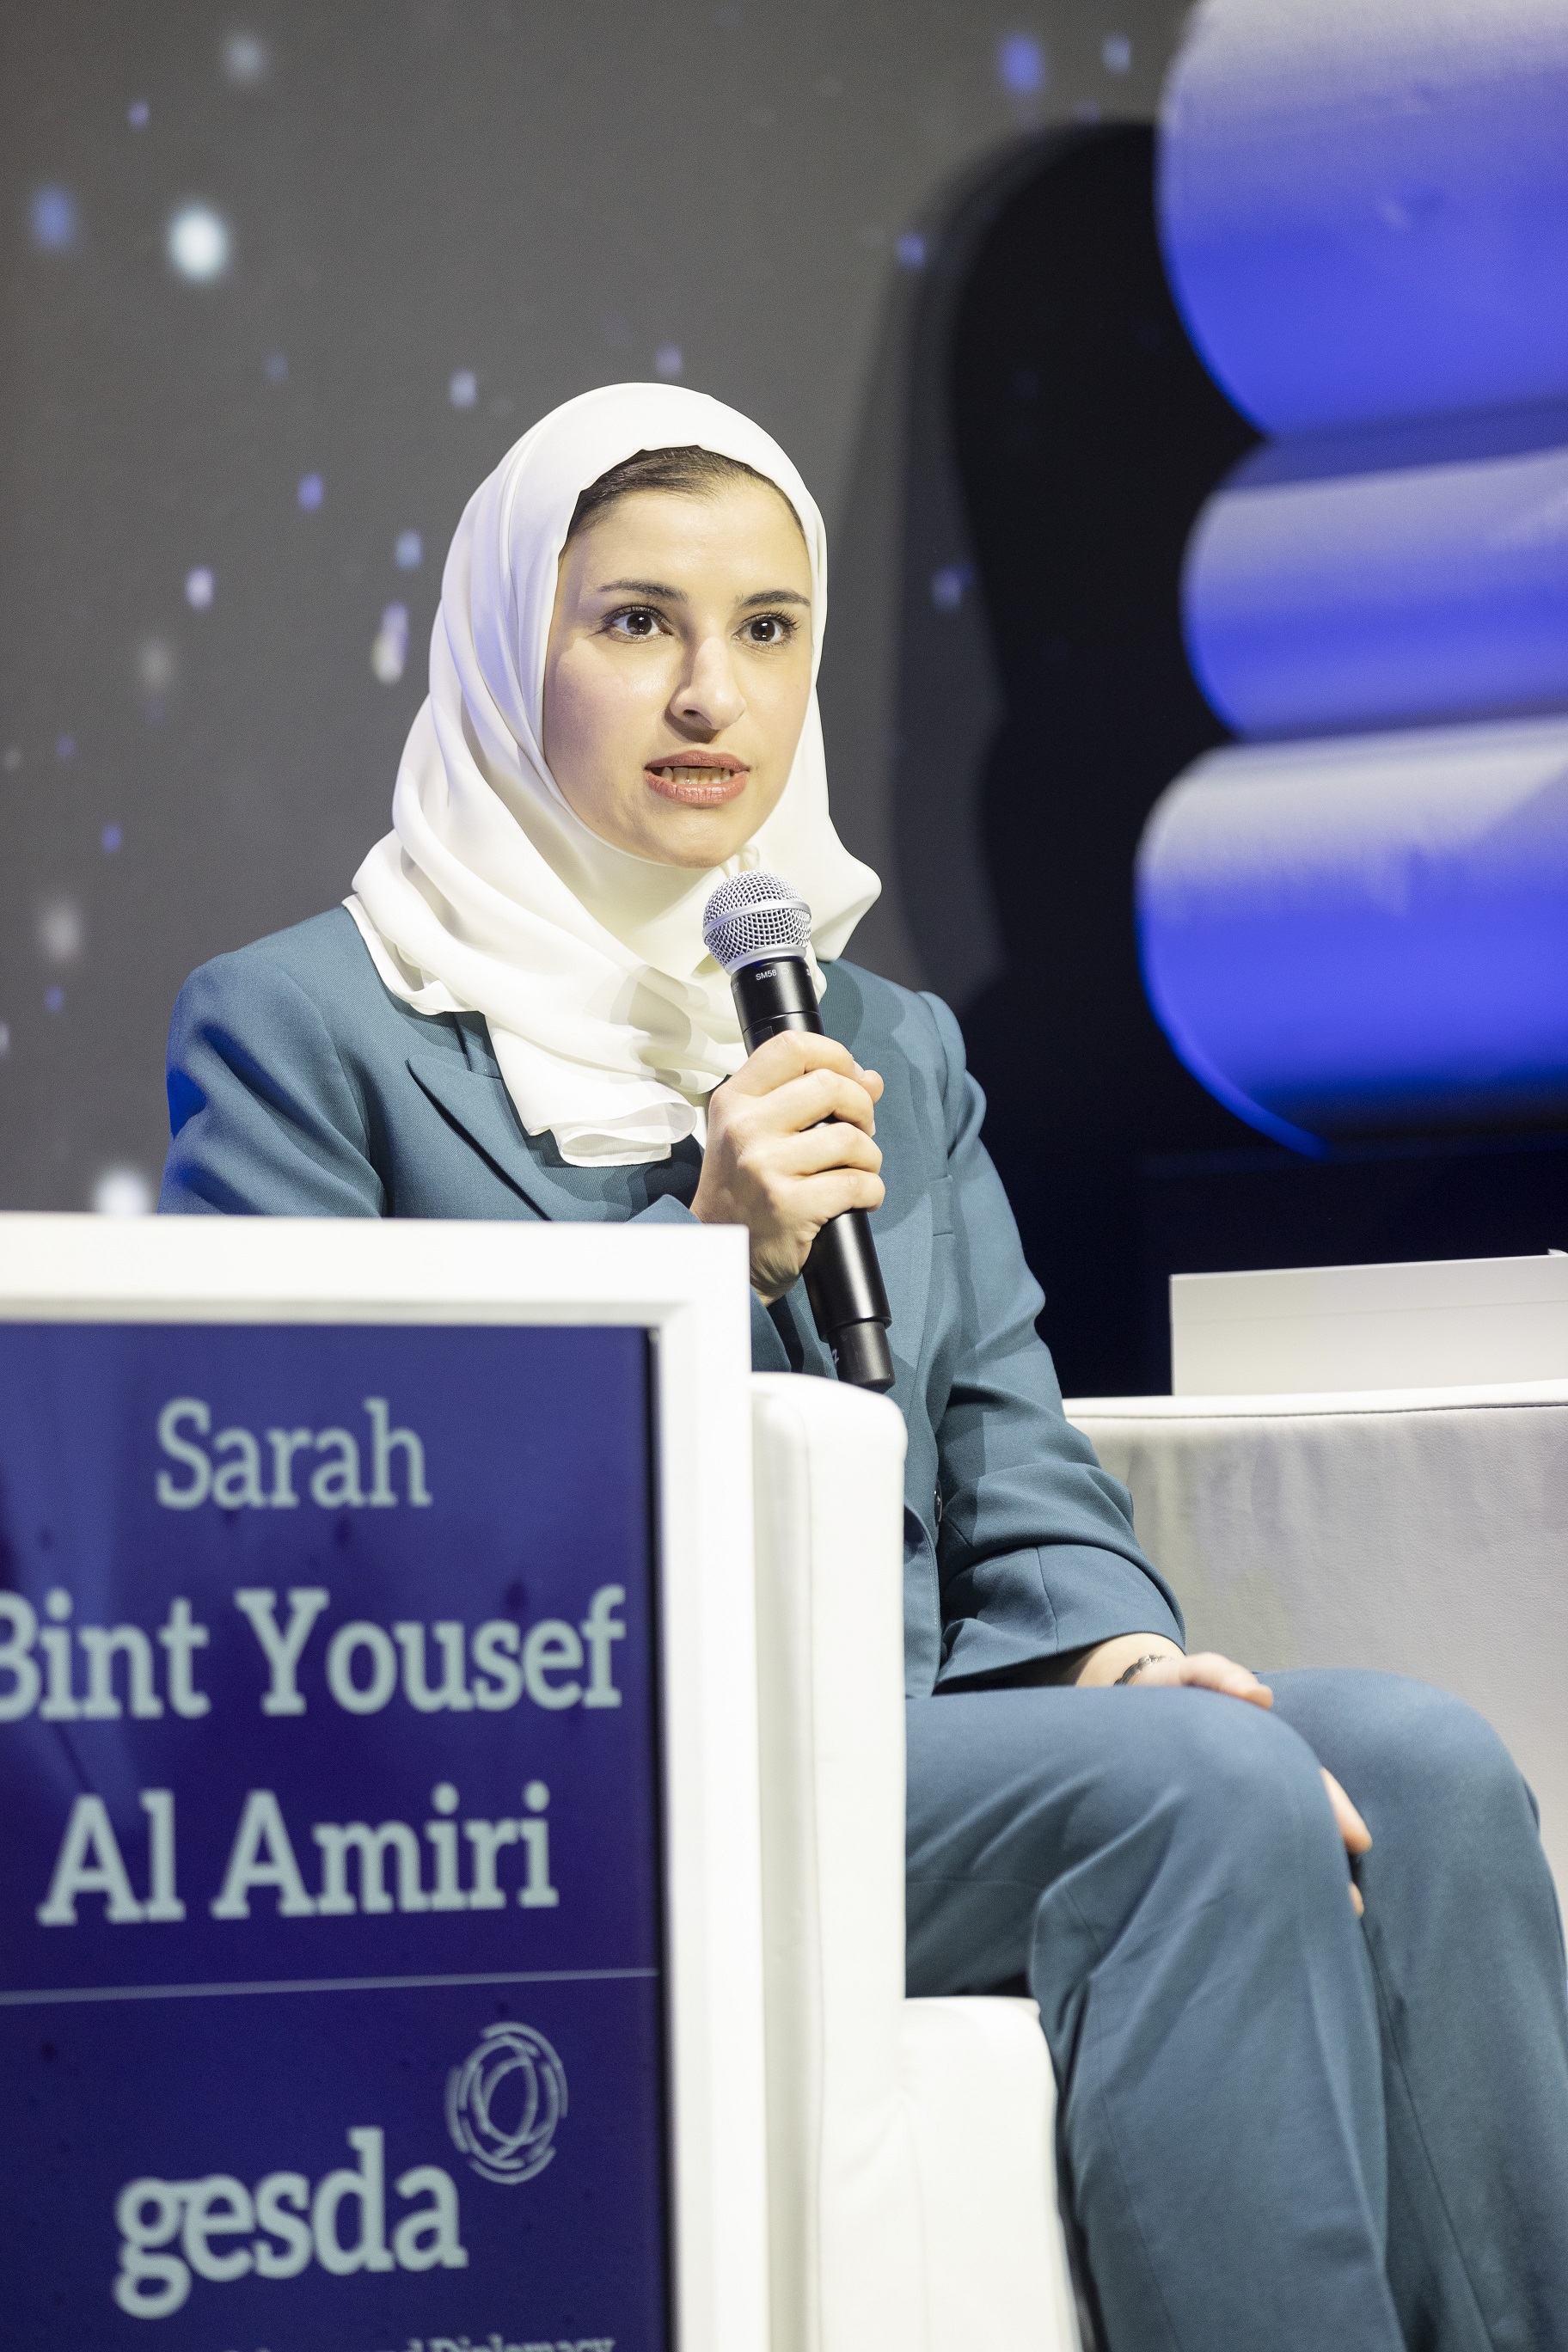 Her Excellency Sarah Al Amiri leads UAE delegation to Switzerland, discusses science diplomacy, quantum technologies